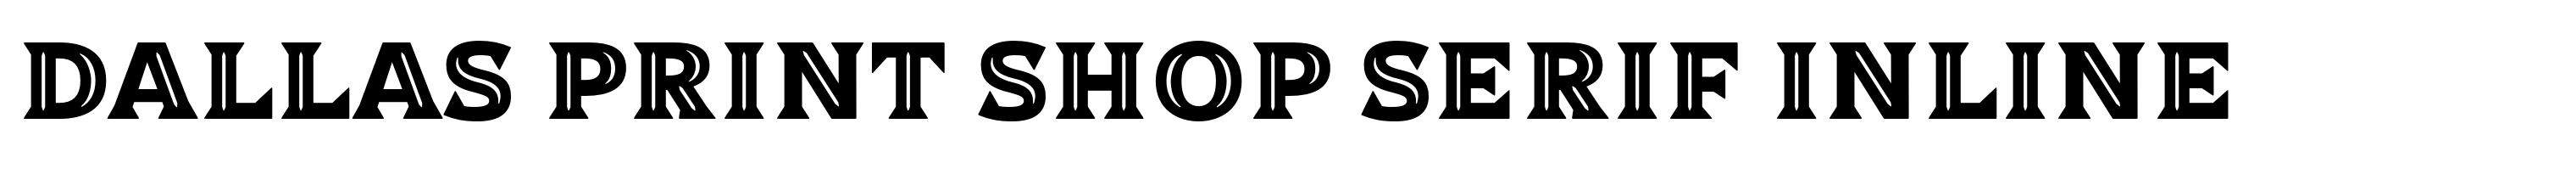 Dallas Print Shop Serif Inline